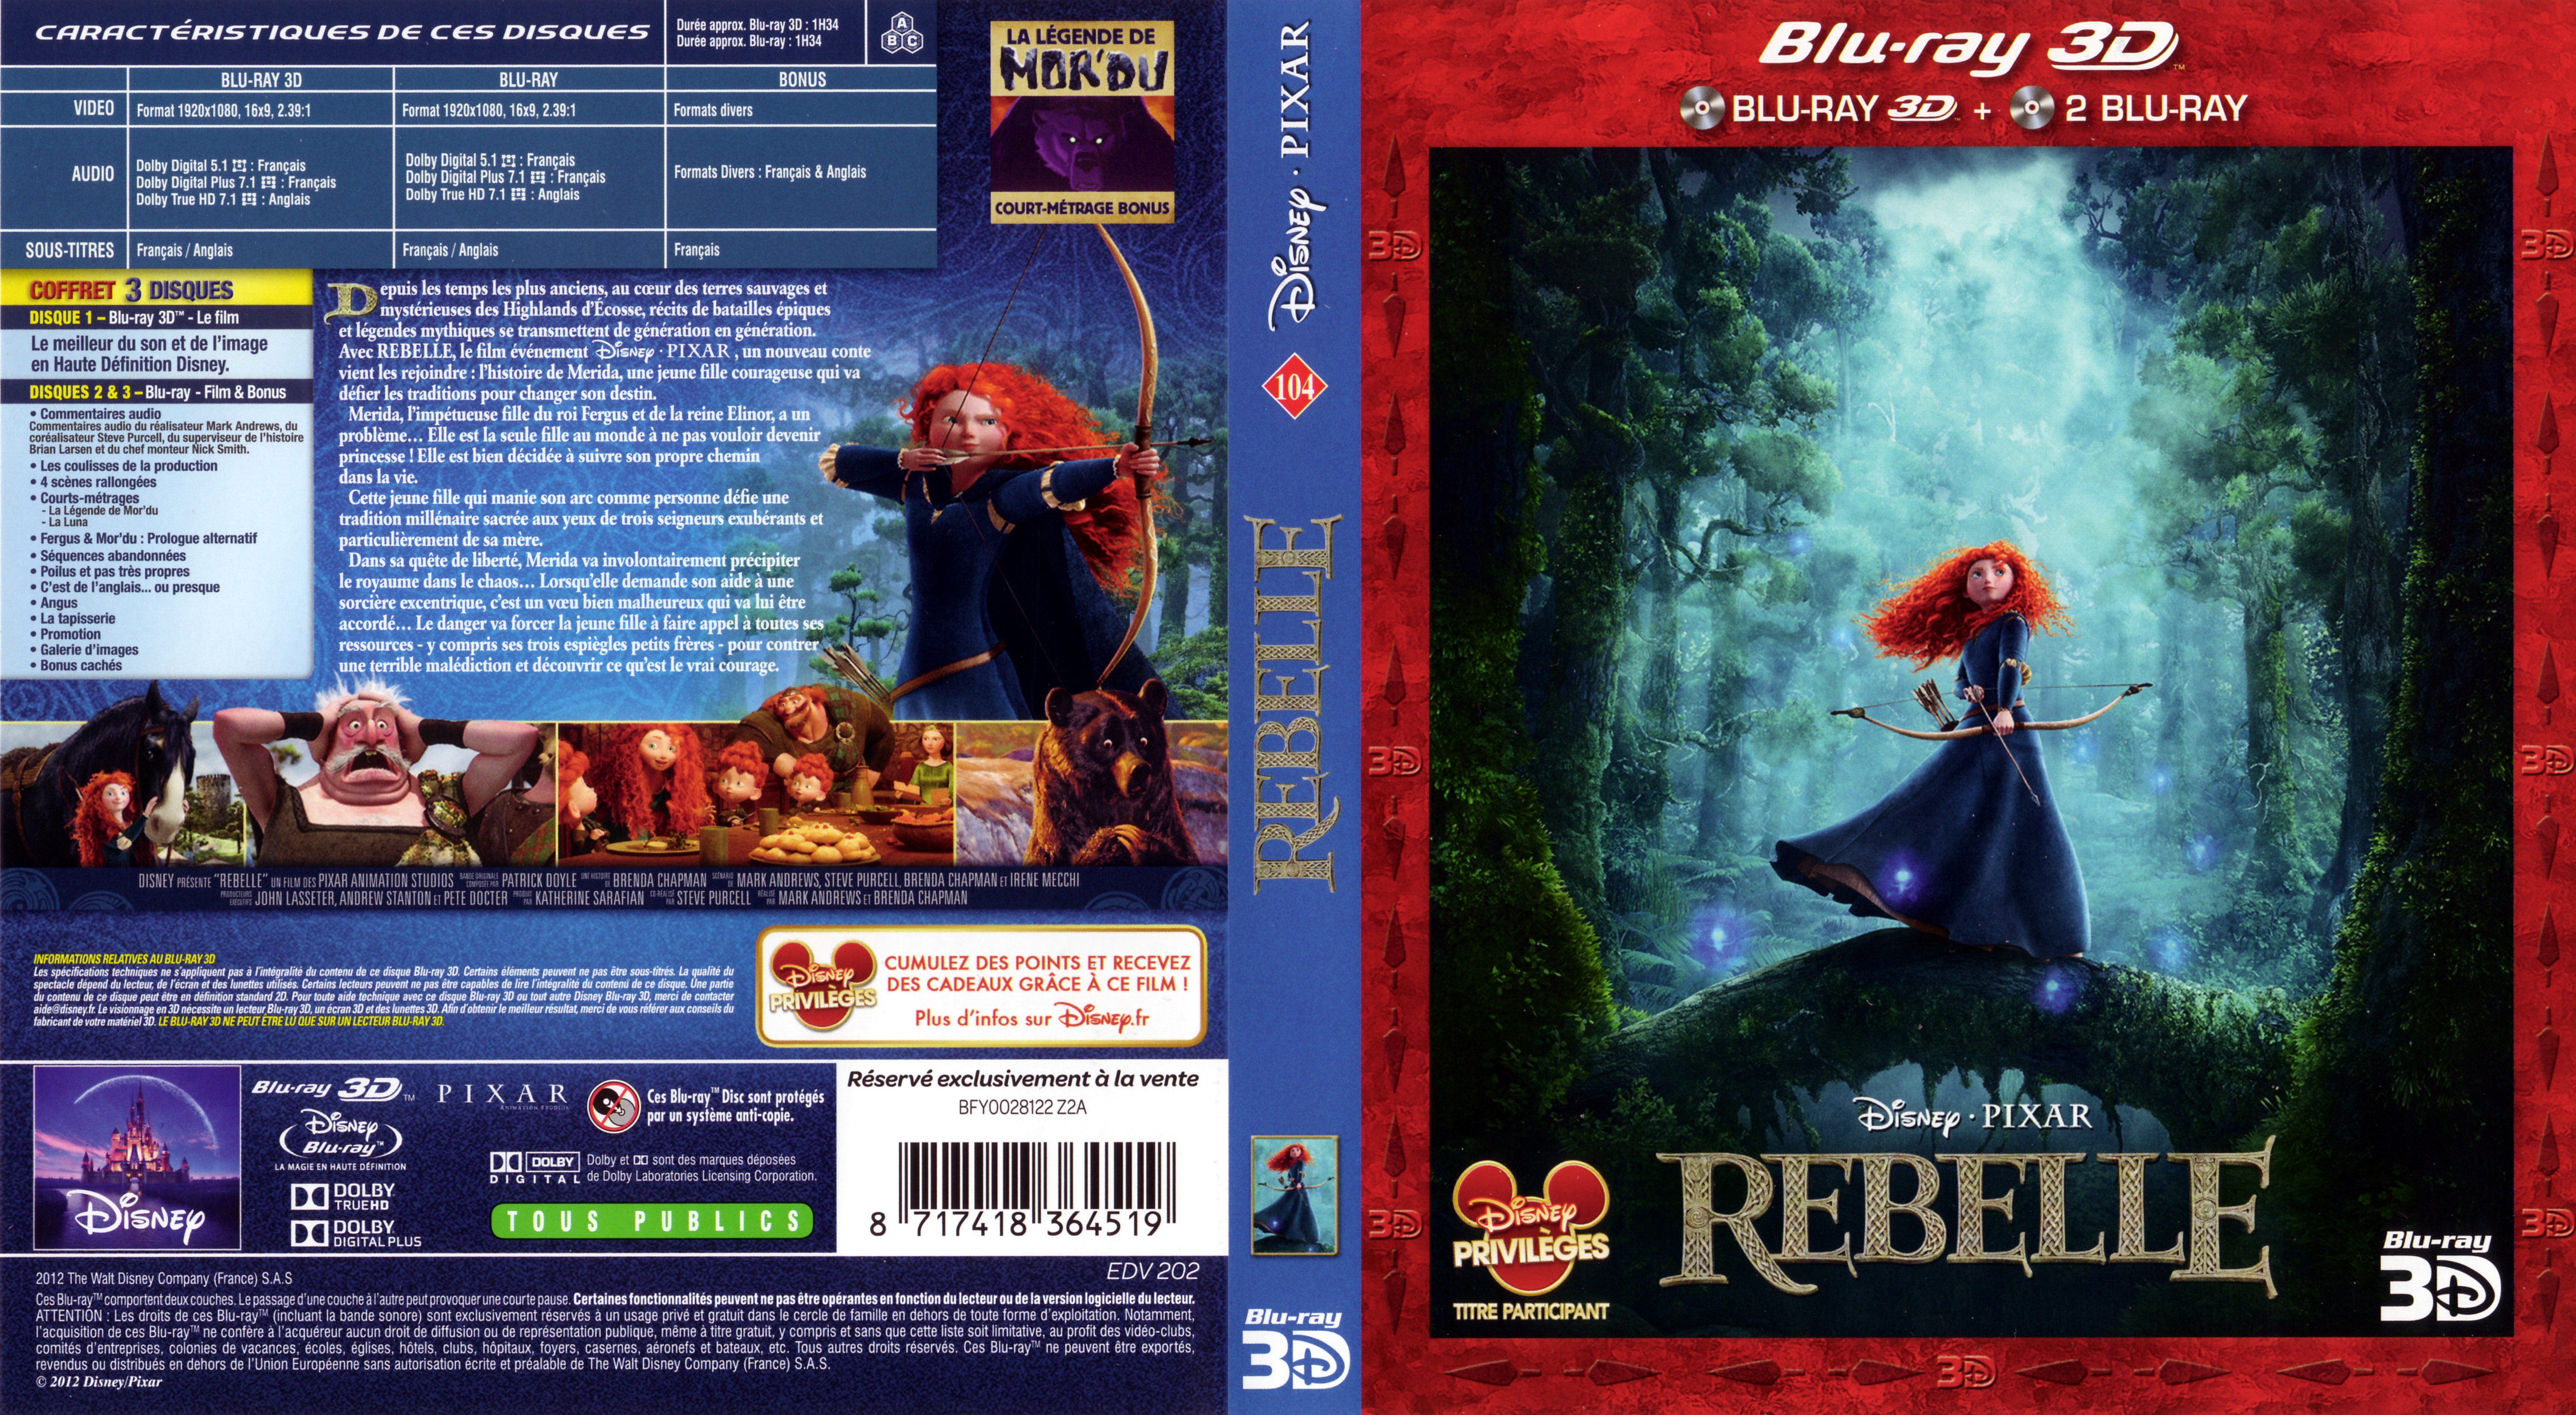 Jaquette DVD Rebelle 3D (BLU-RAY) v2